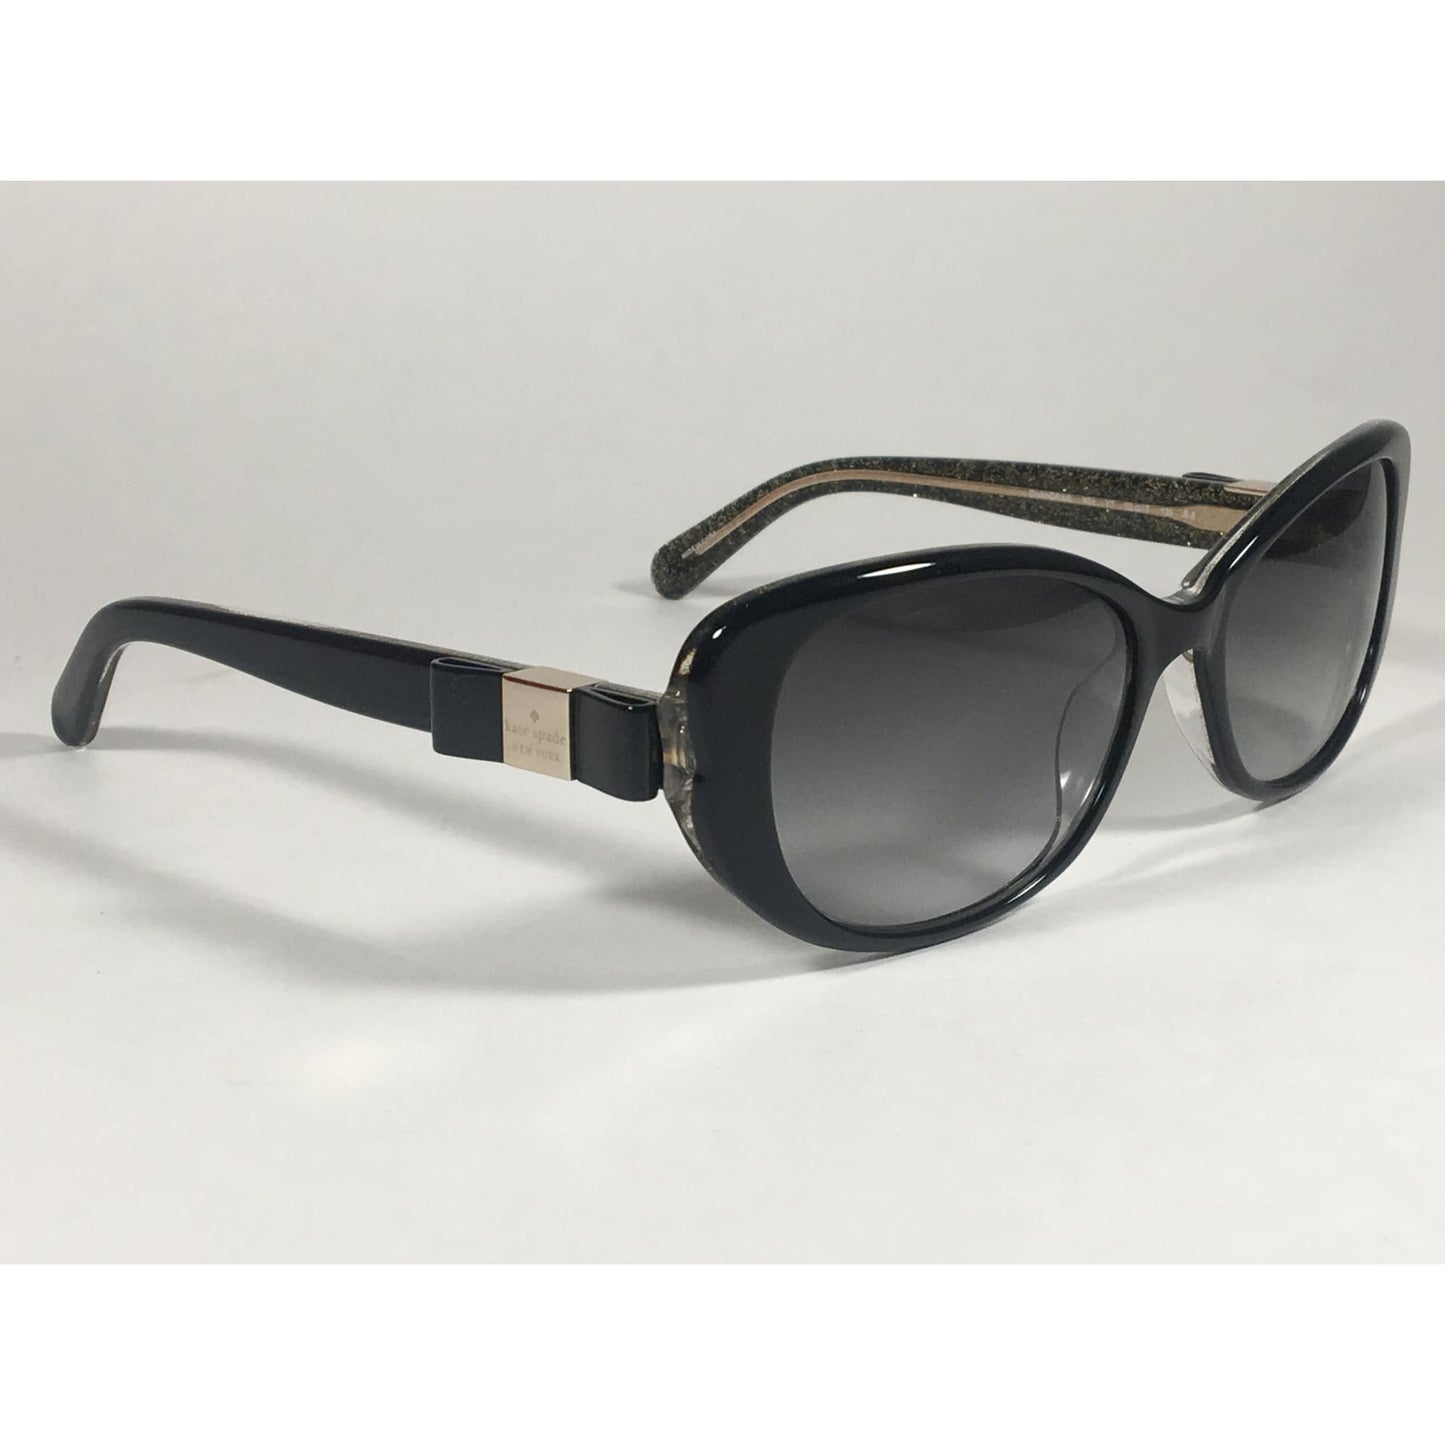 Kate Spade Chandra X84 Y7 Flat Oval Sunglasses Black Gold Glitter Gray Gradient Lens - Sunglasses